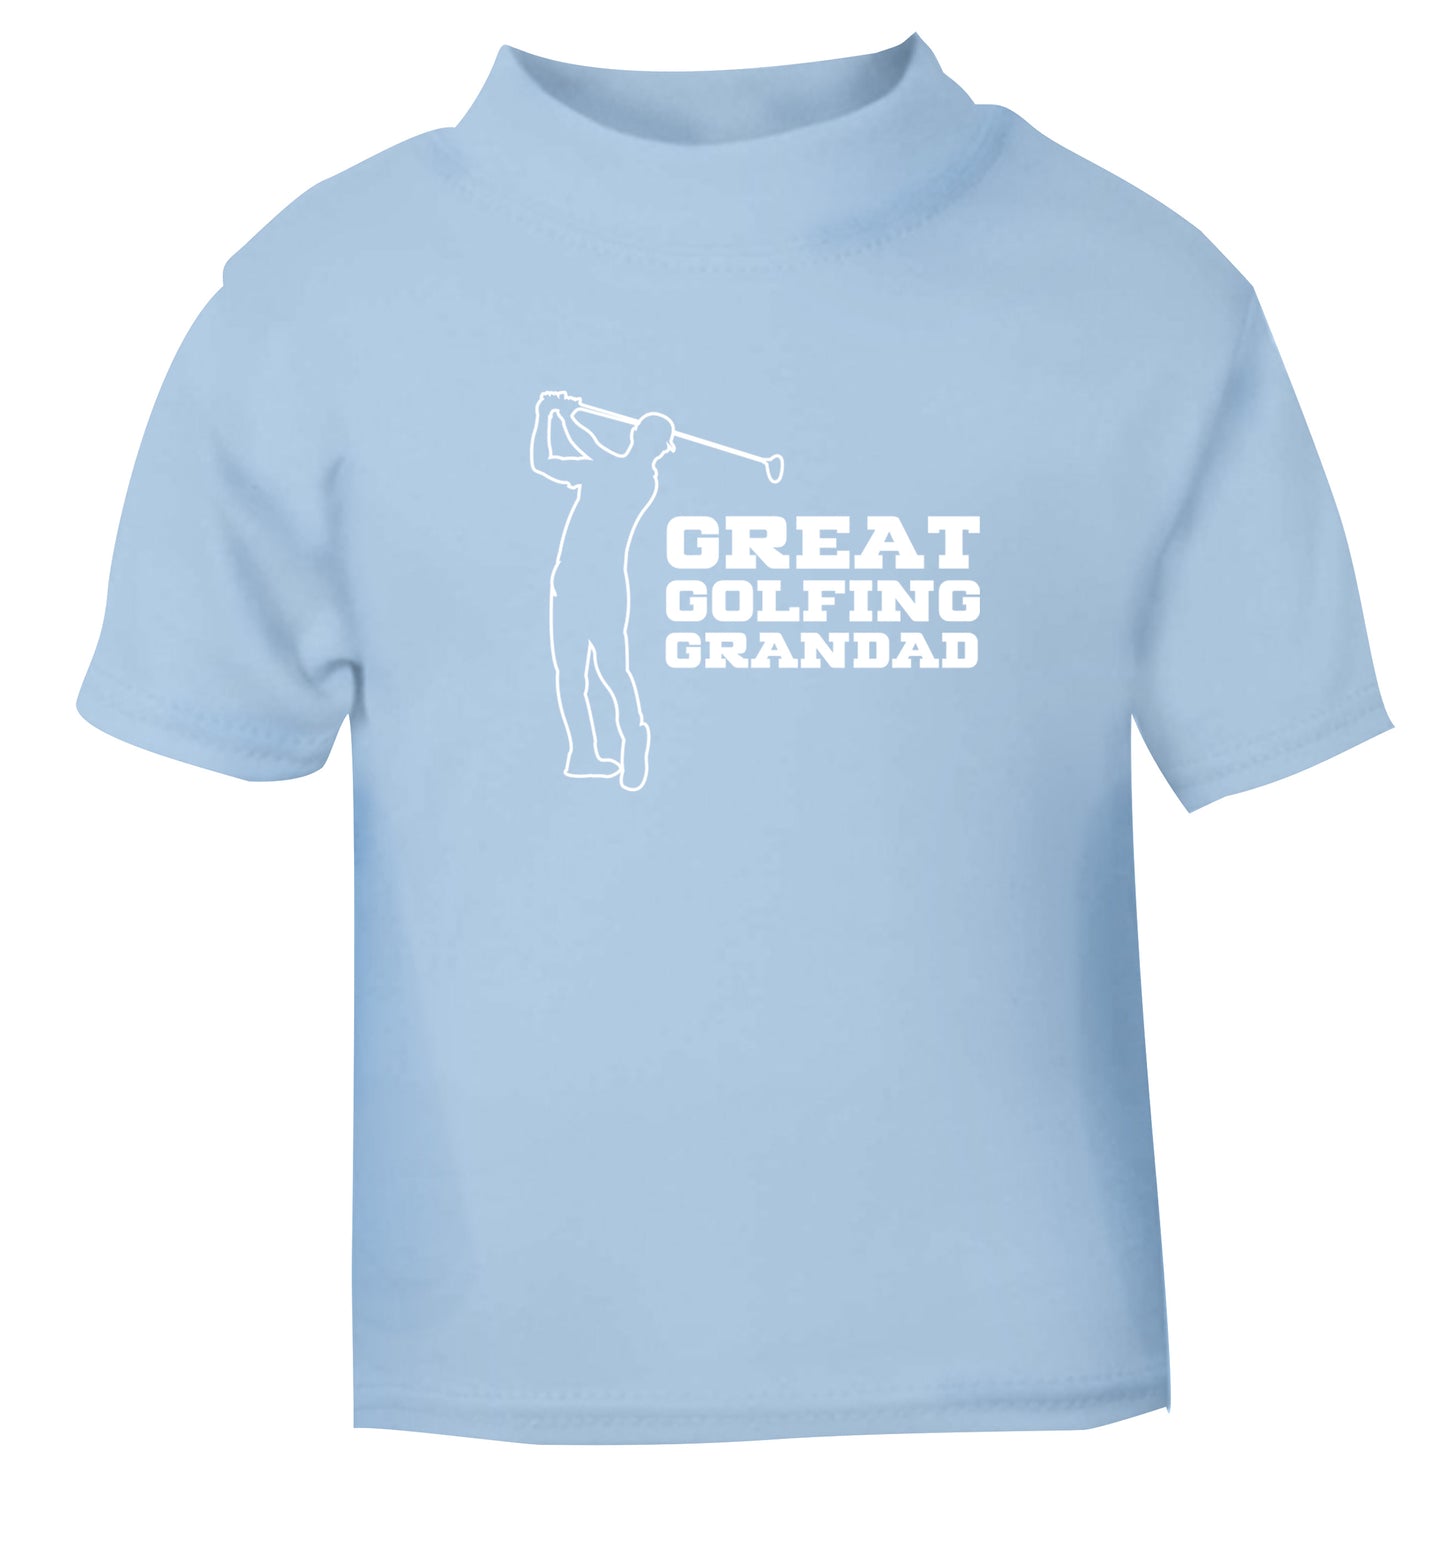 Great Golfing Grandad light blue Baby Toddler Tshirt 2 Years